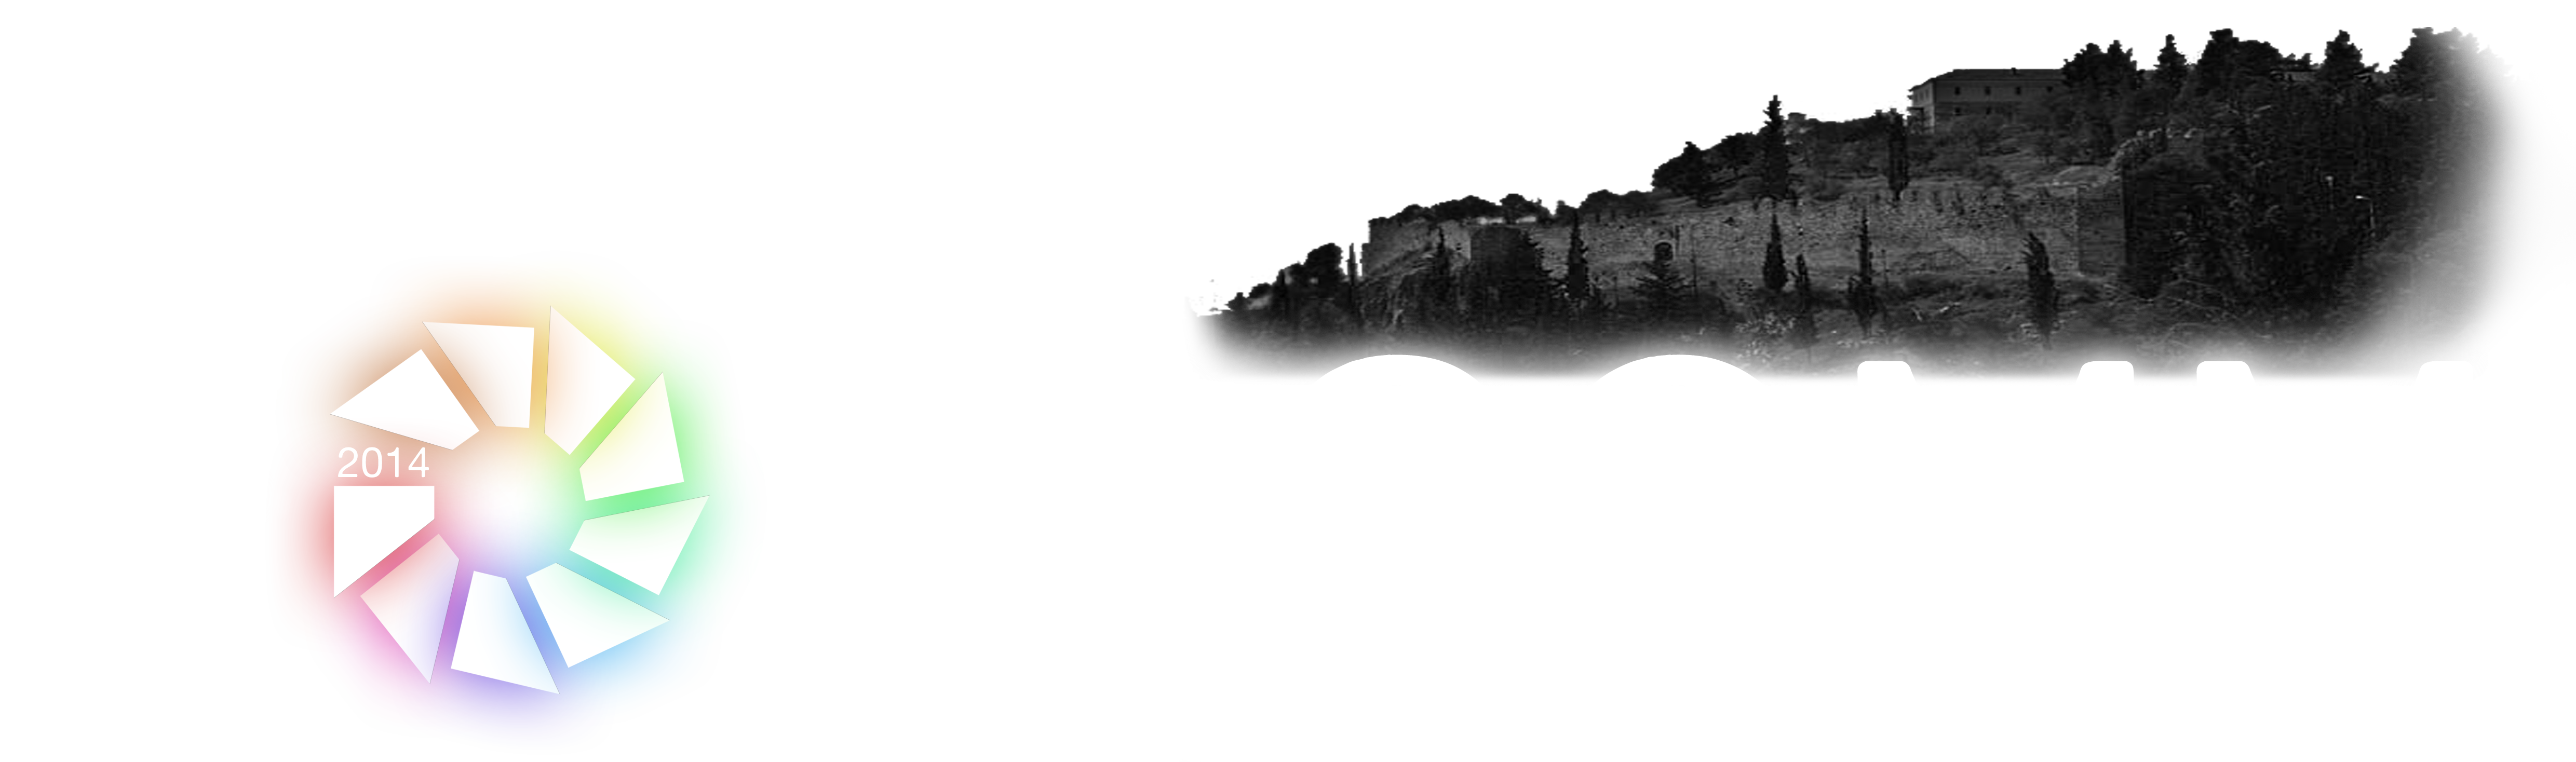 fosscomm logo transparent